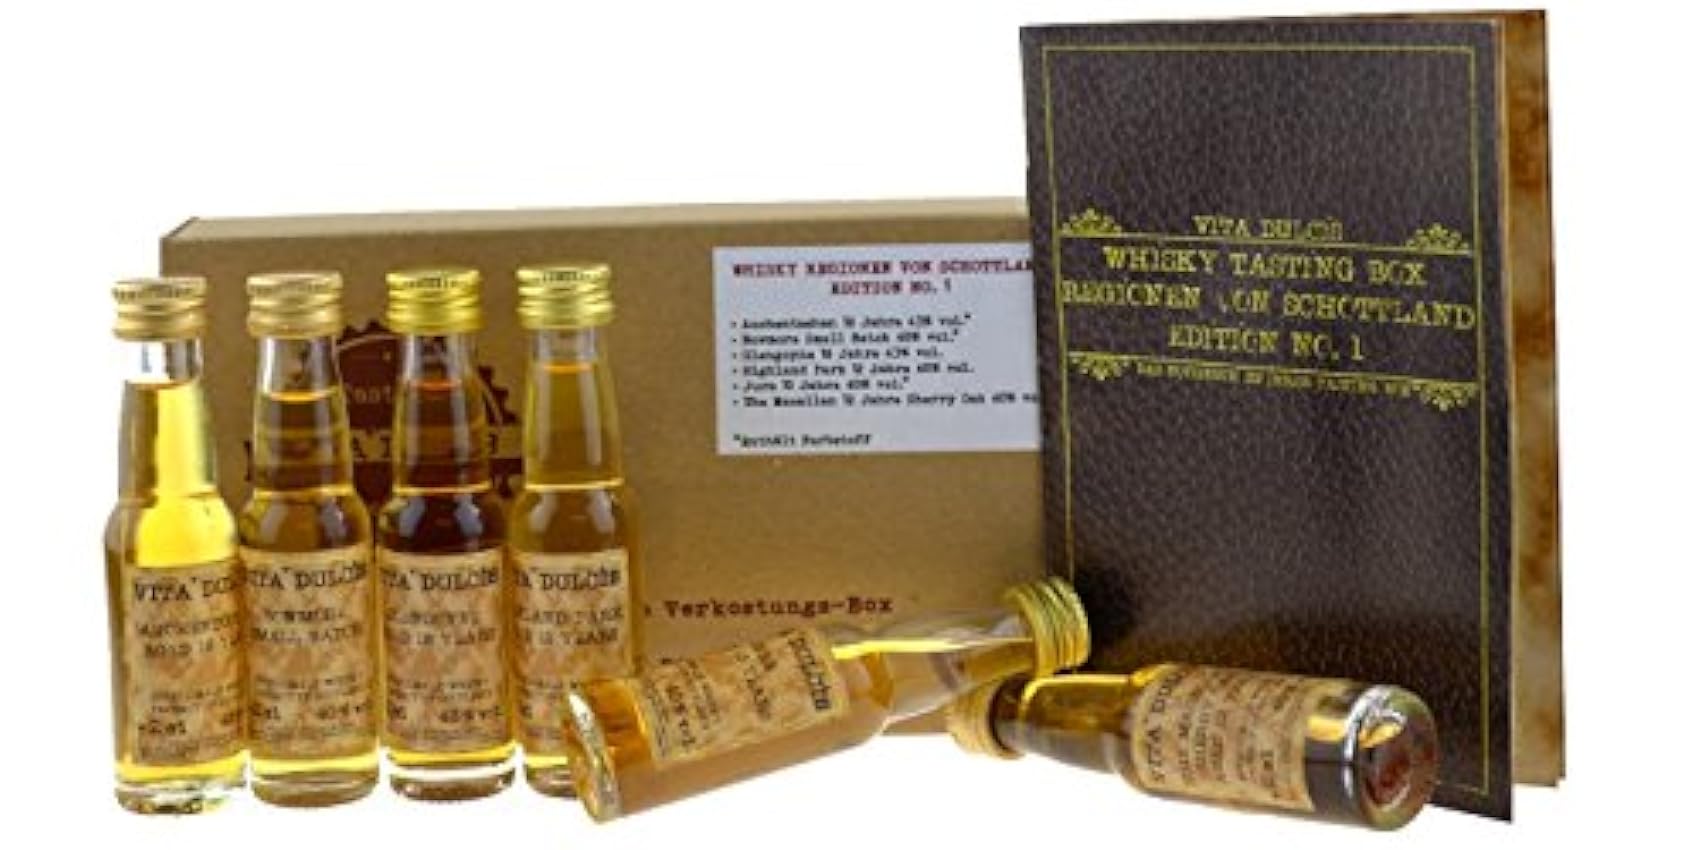 Klassiker Vita Dulcis Tasting Box Whisky Nr. 5: Regione